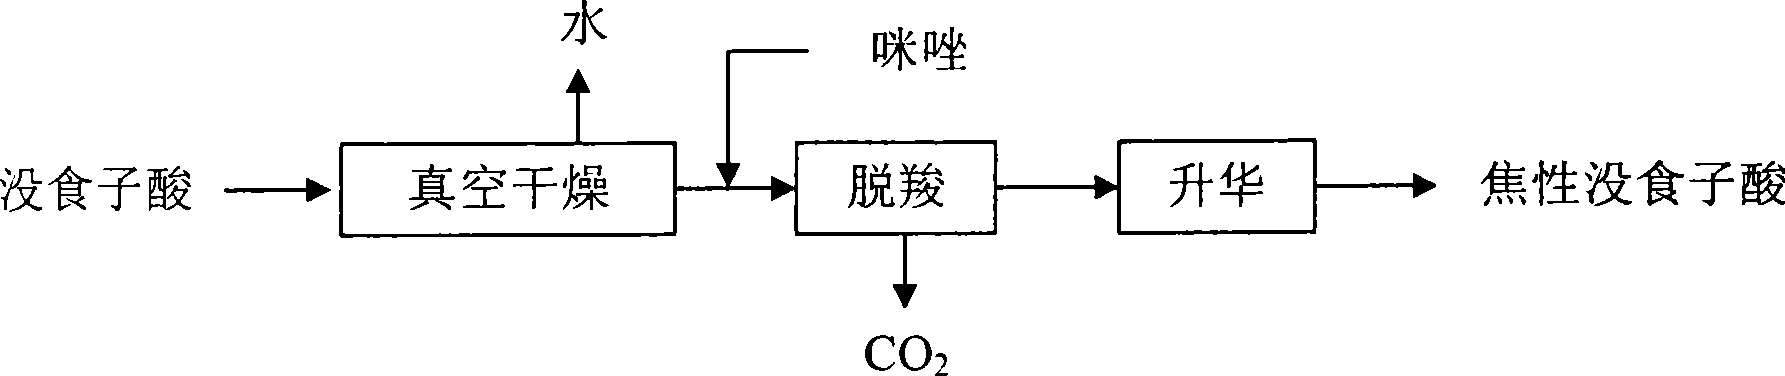 Method for preparing pyrogallic acid with glyoxaline as gallic acid decarboxylation catalyst